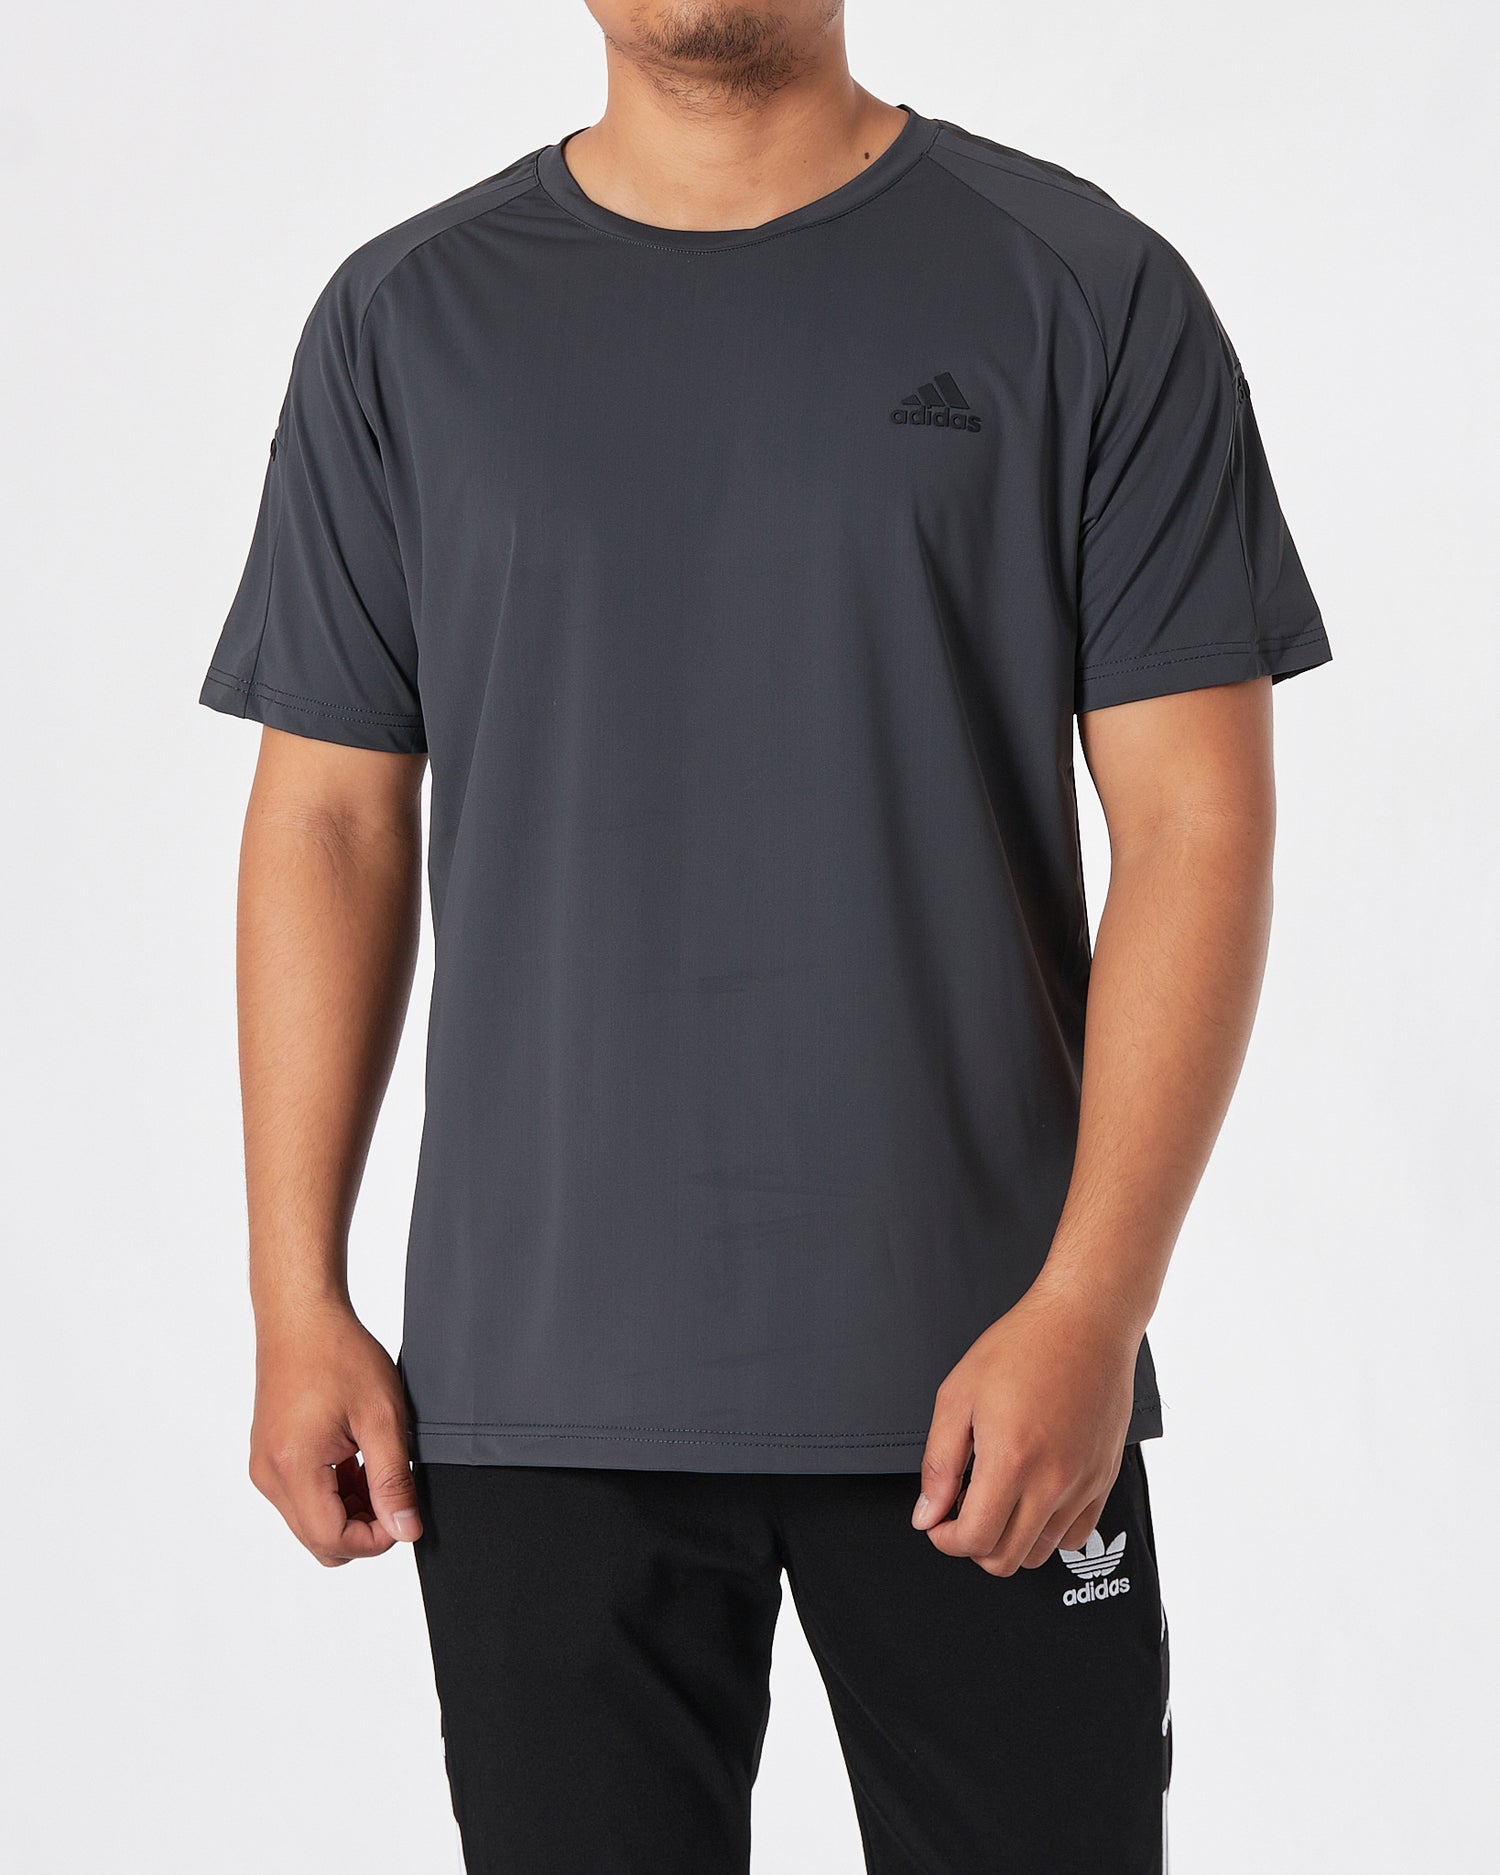 ADI Striped Men Grey Sport T-Shirt 13.90